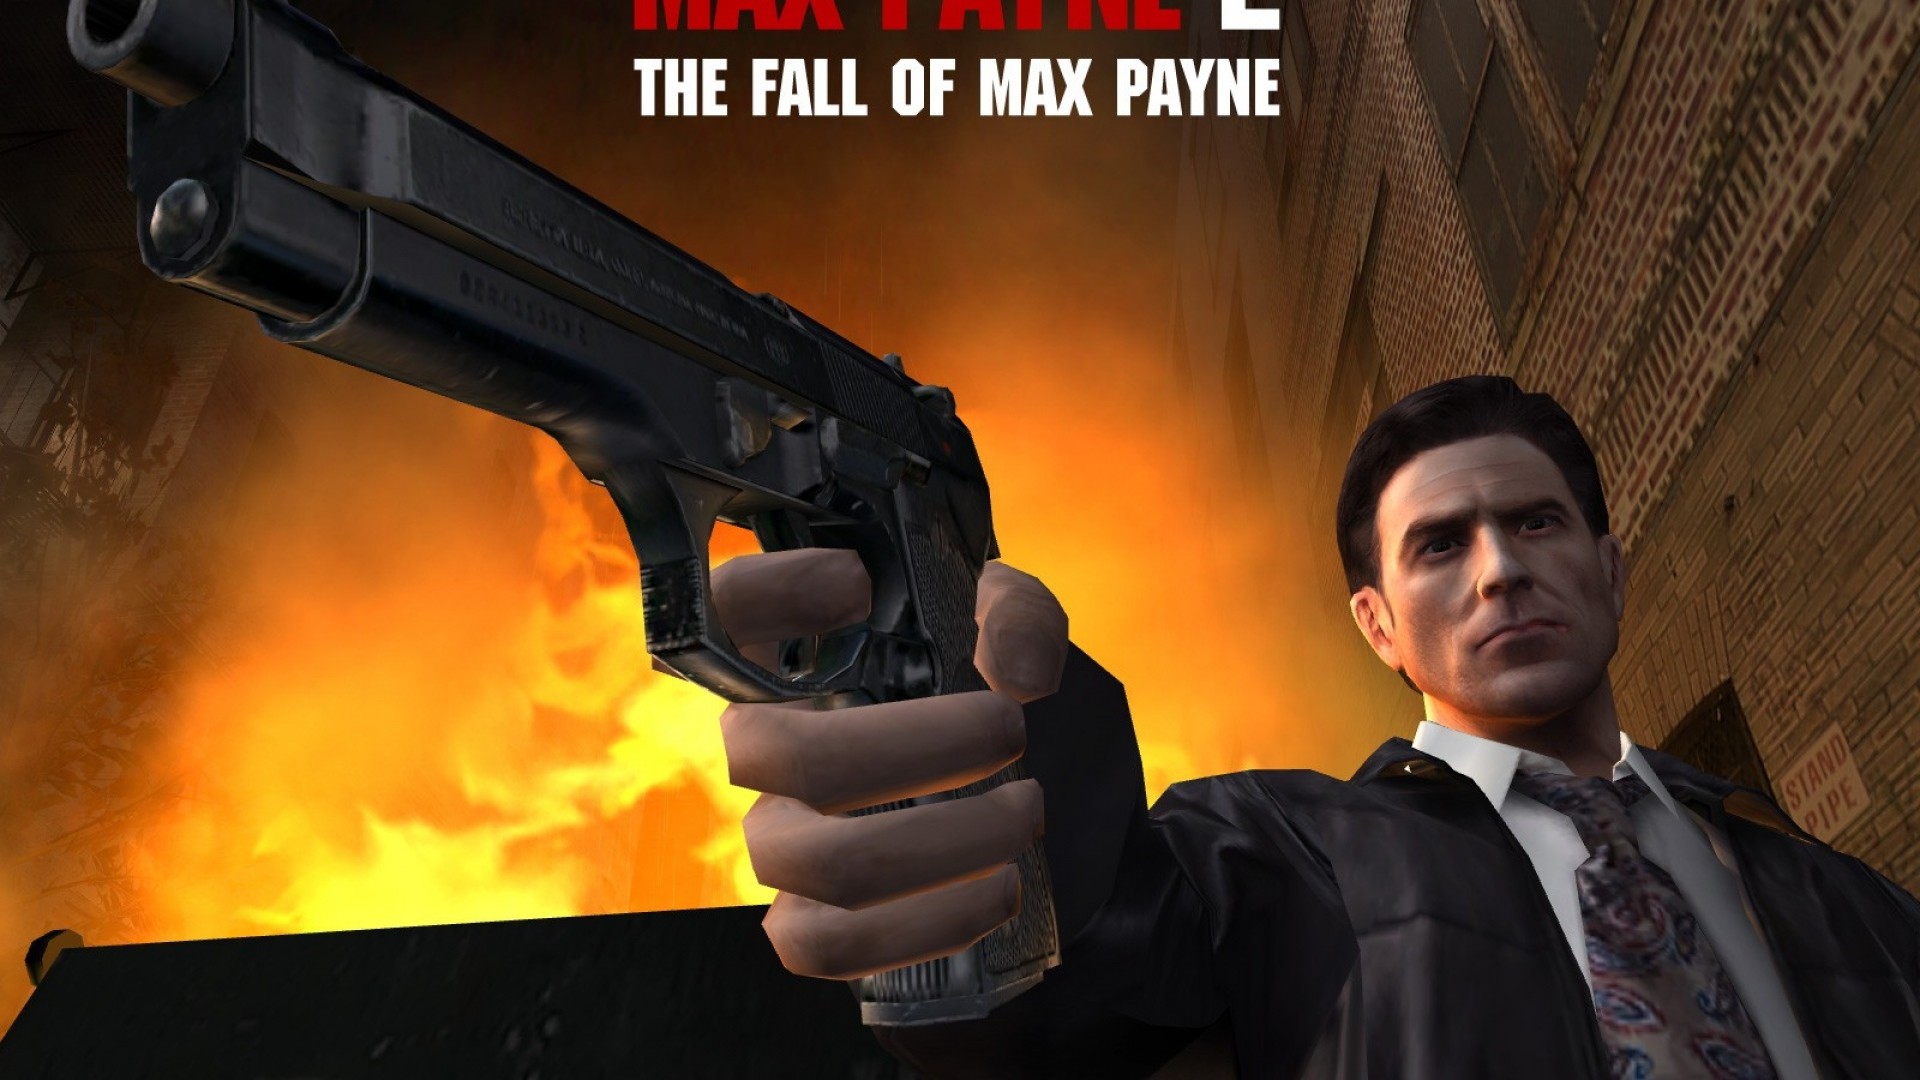 1920x1080 ... max payne 2, the fall of max payne, pistol